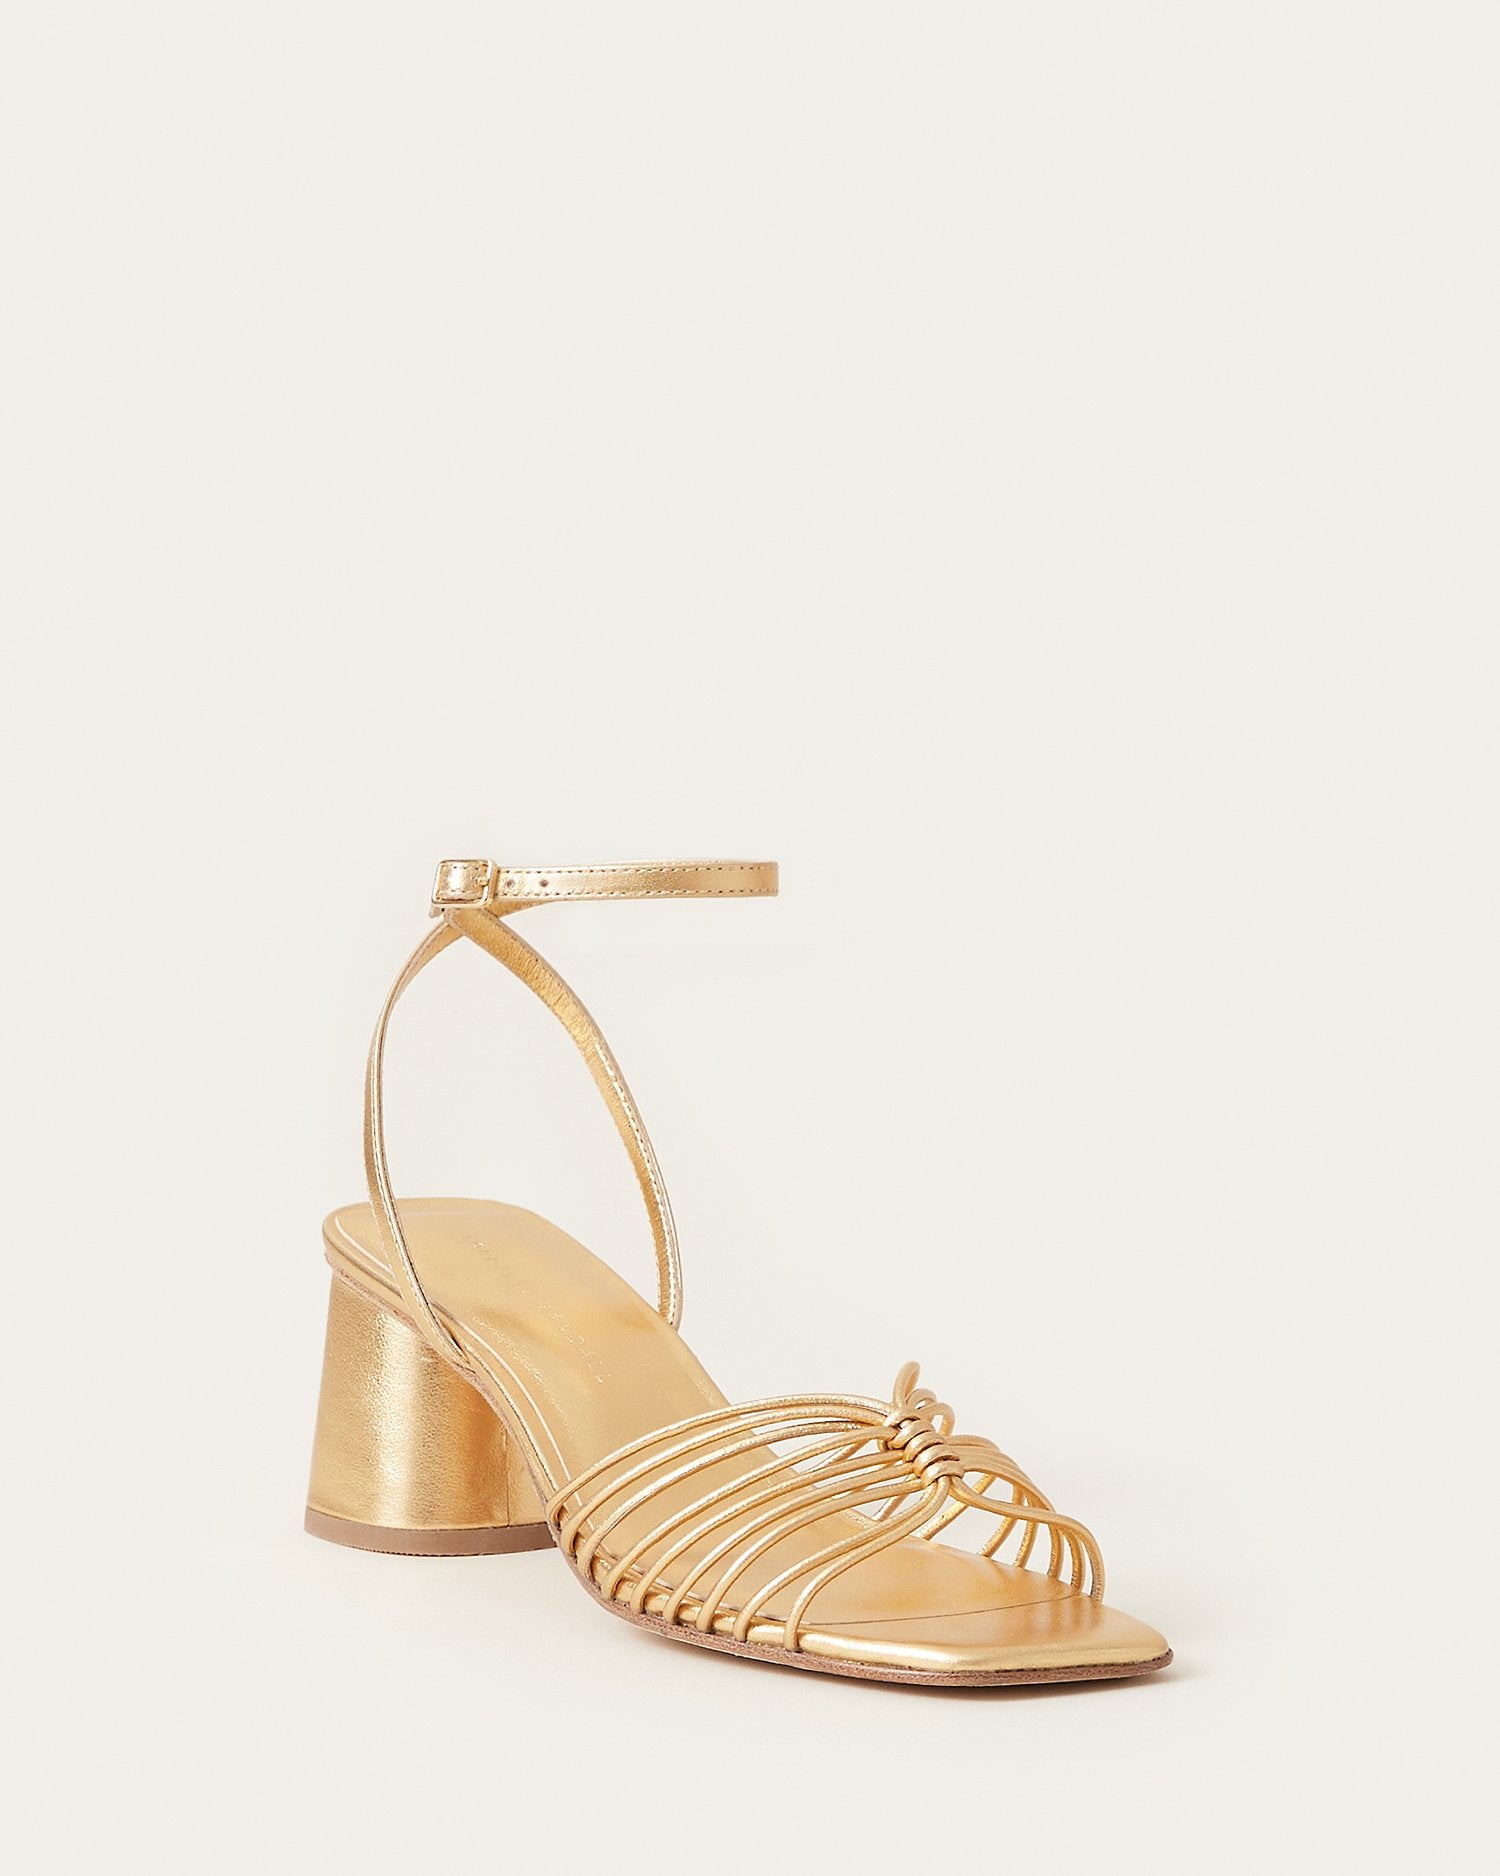 gold strappy 2 inch heels